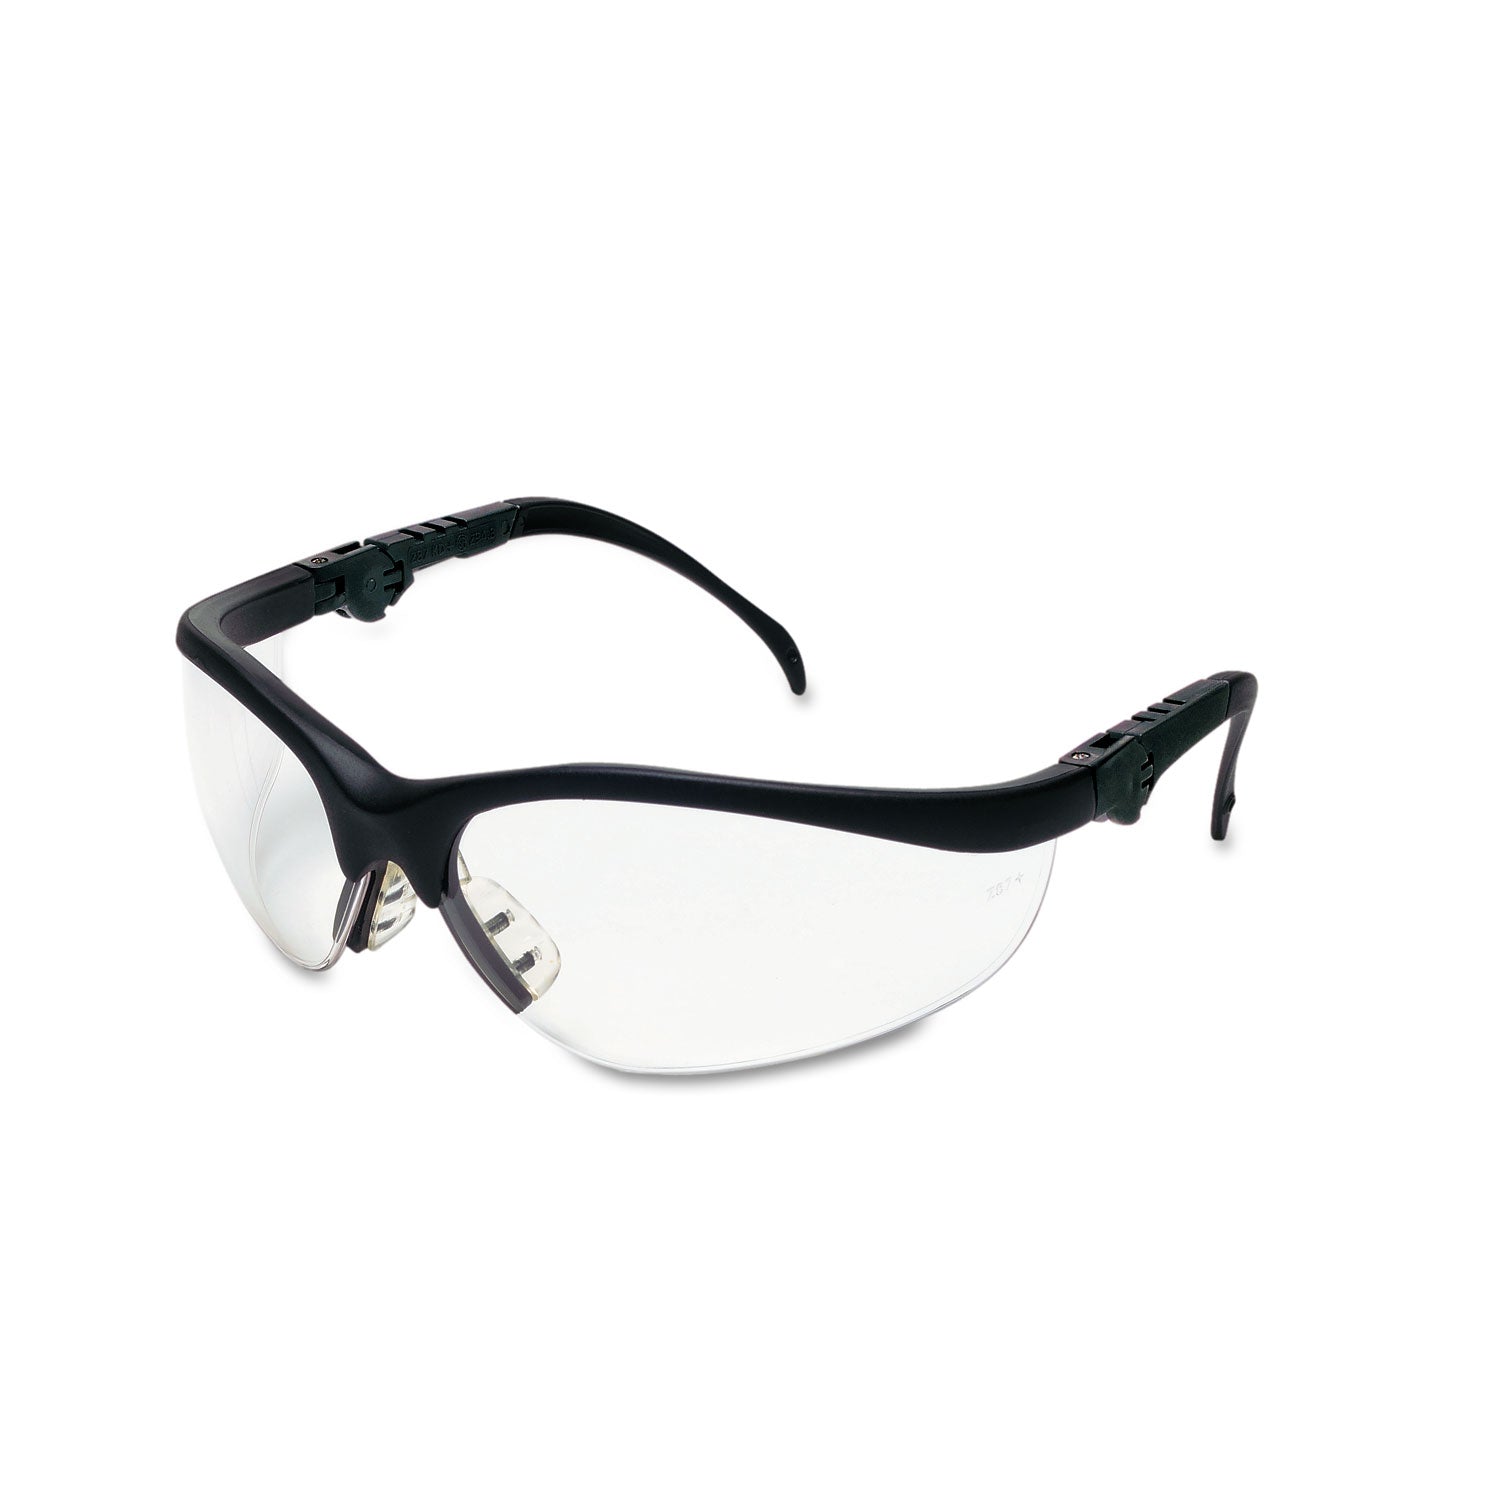 Klondike Plus Safety Glasses, Black Frame, Clear Lens - 